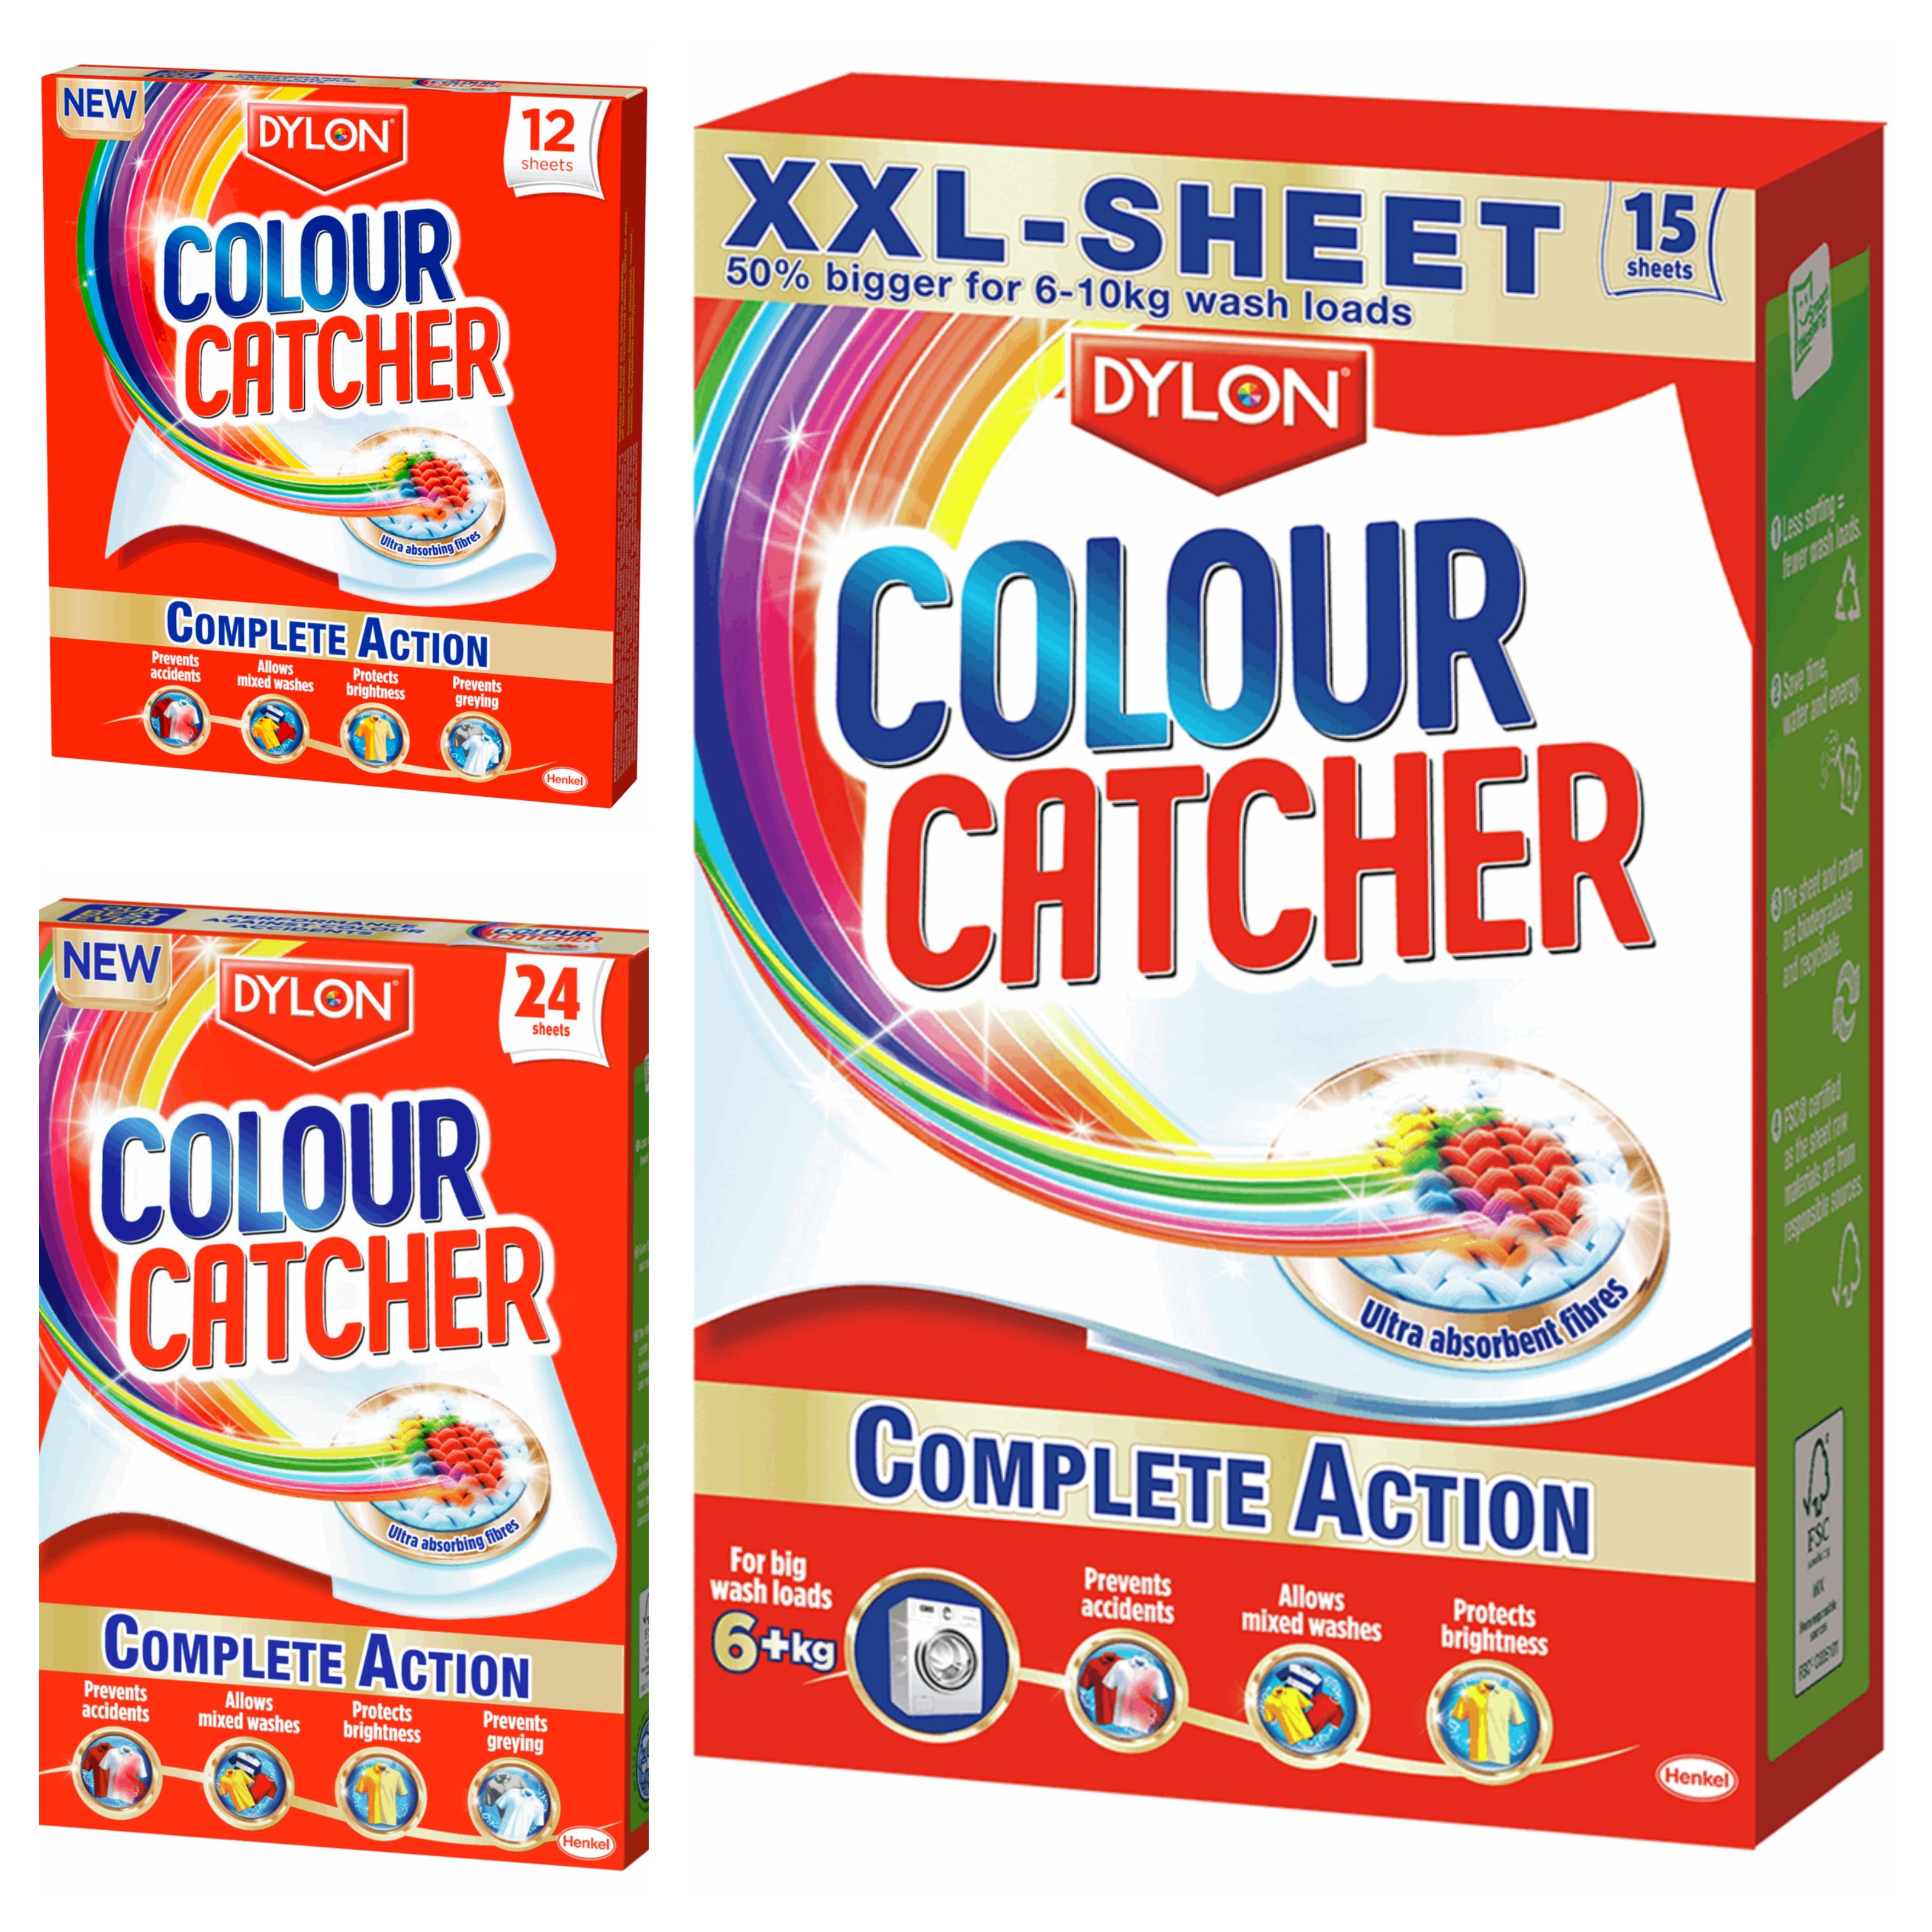 Dylon colour catcher test and review 